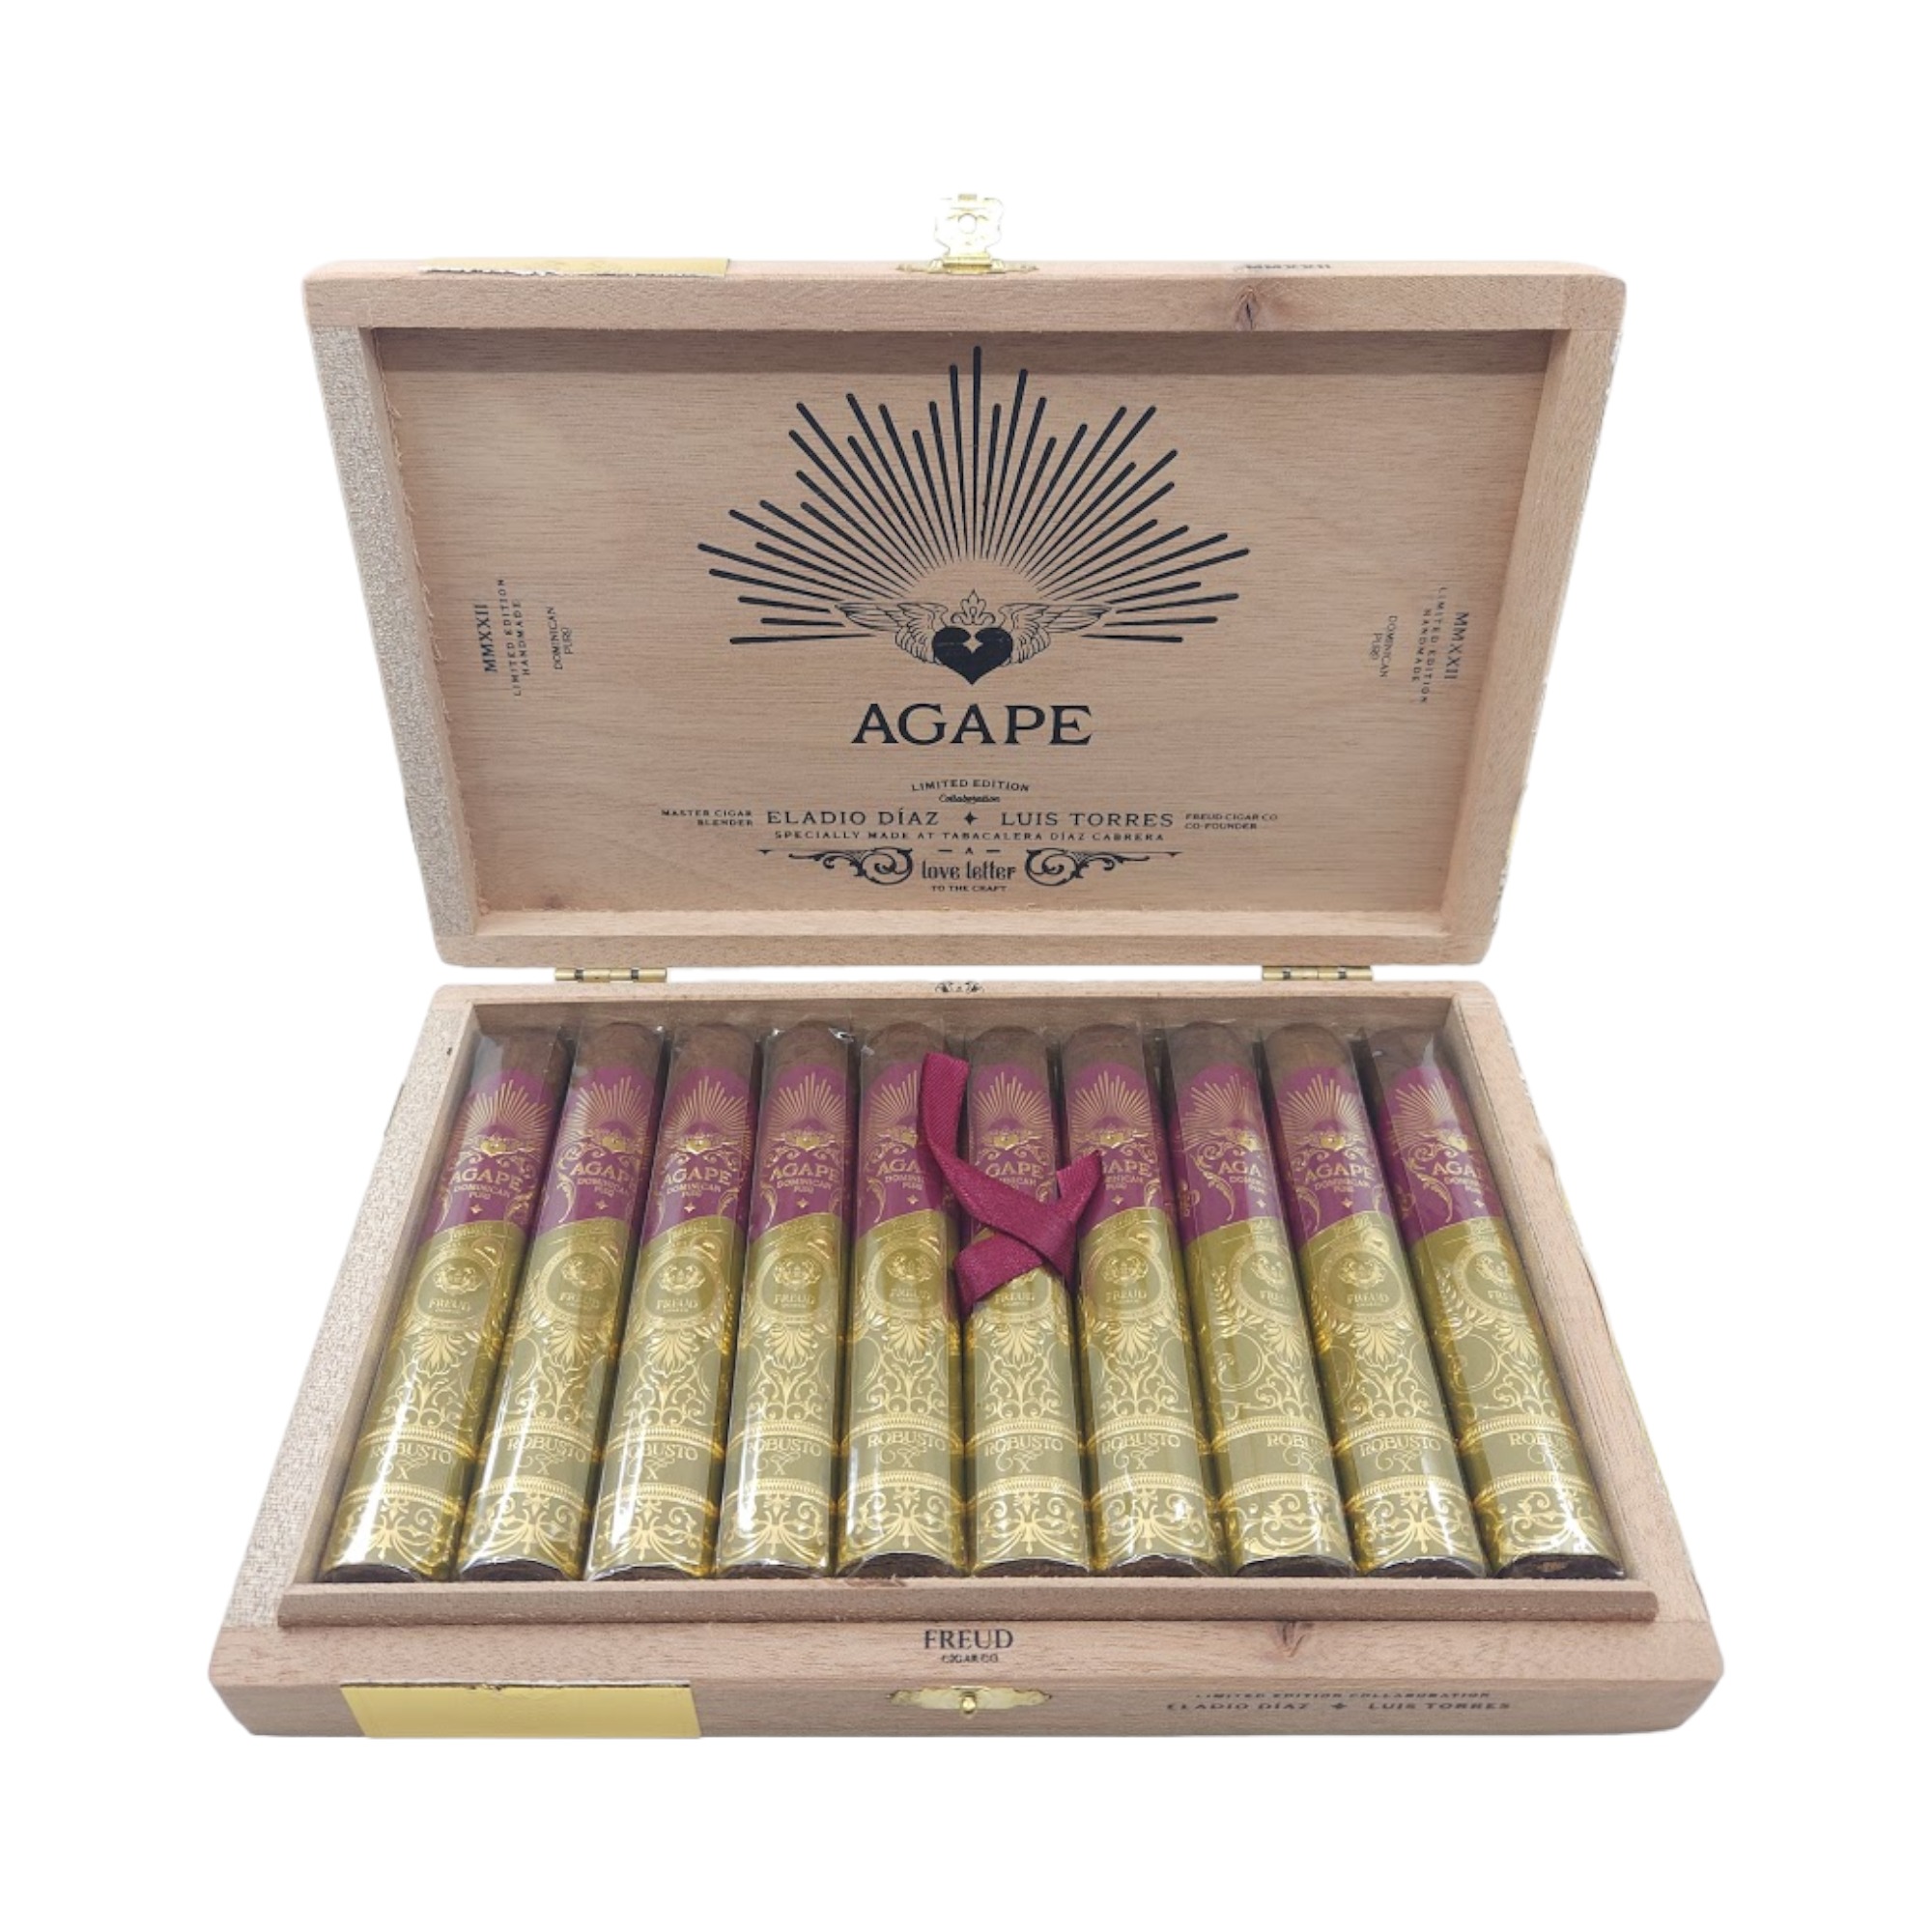 Agape Limited Edition Robusto Box 10